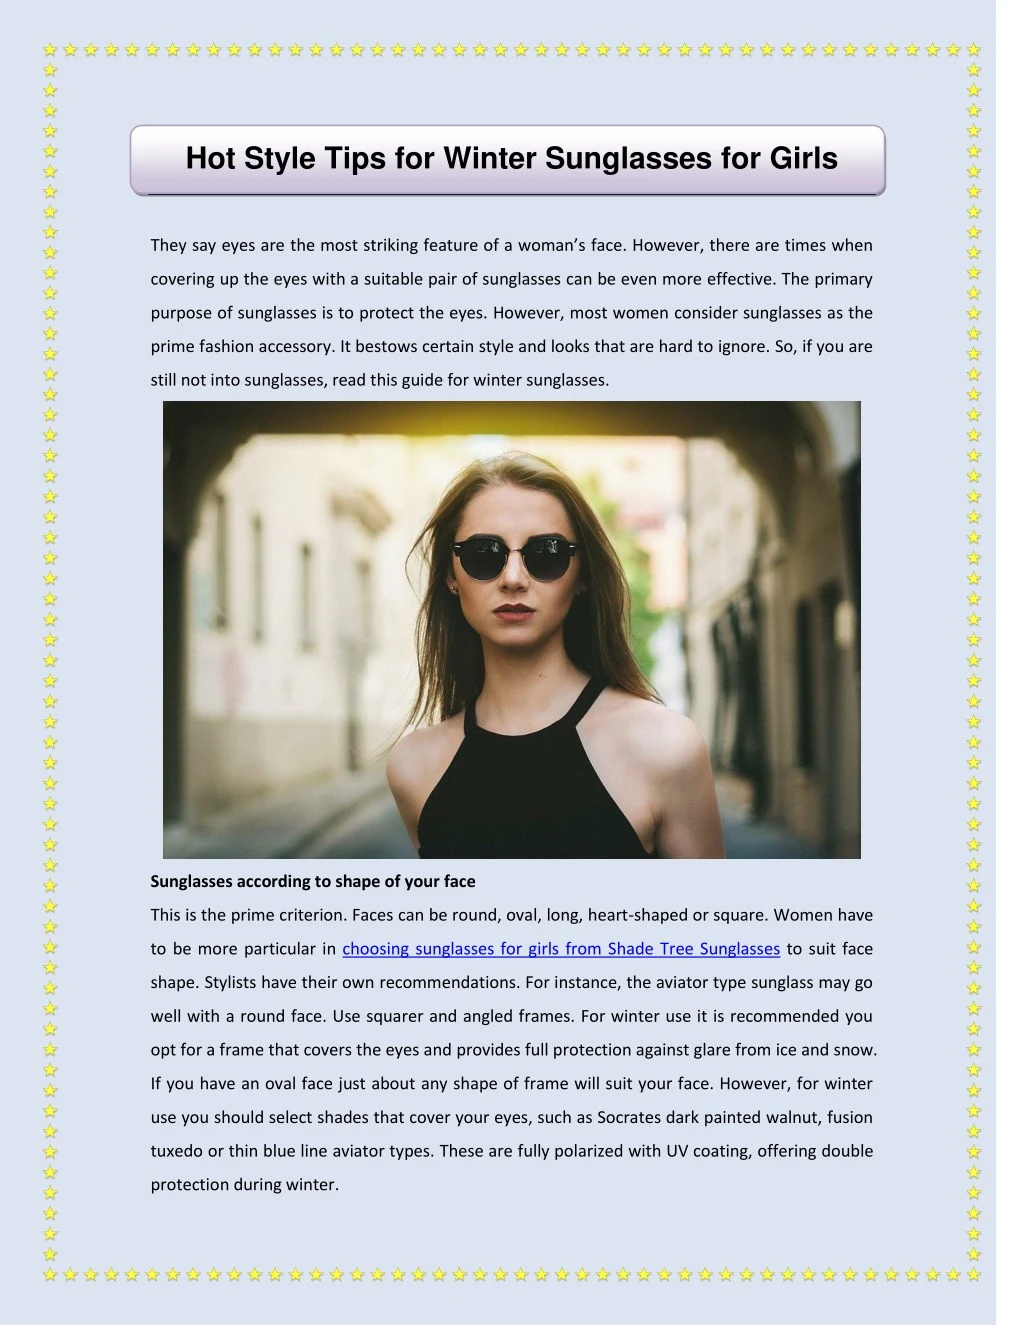 hot style tips for winter sunglasses for girls